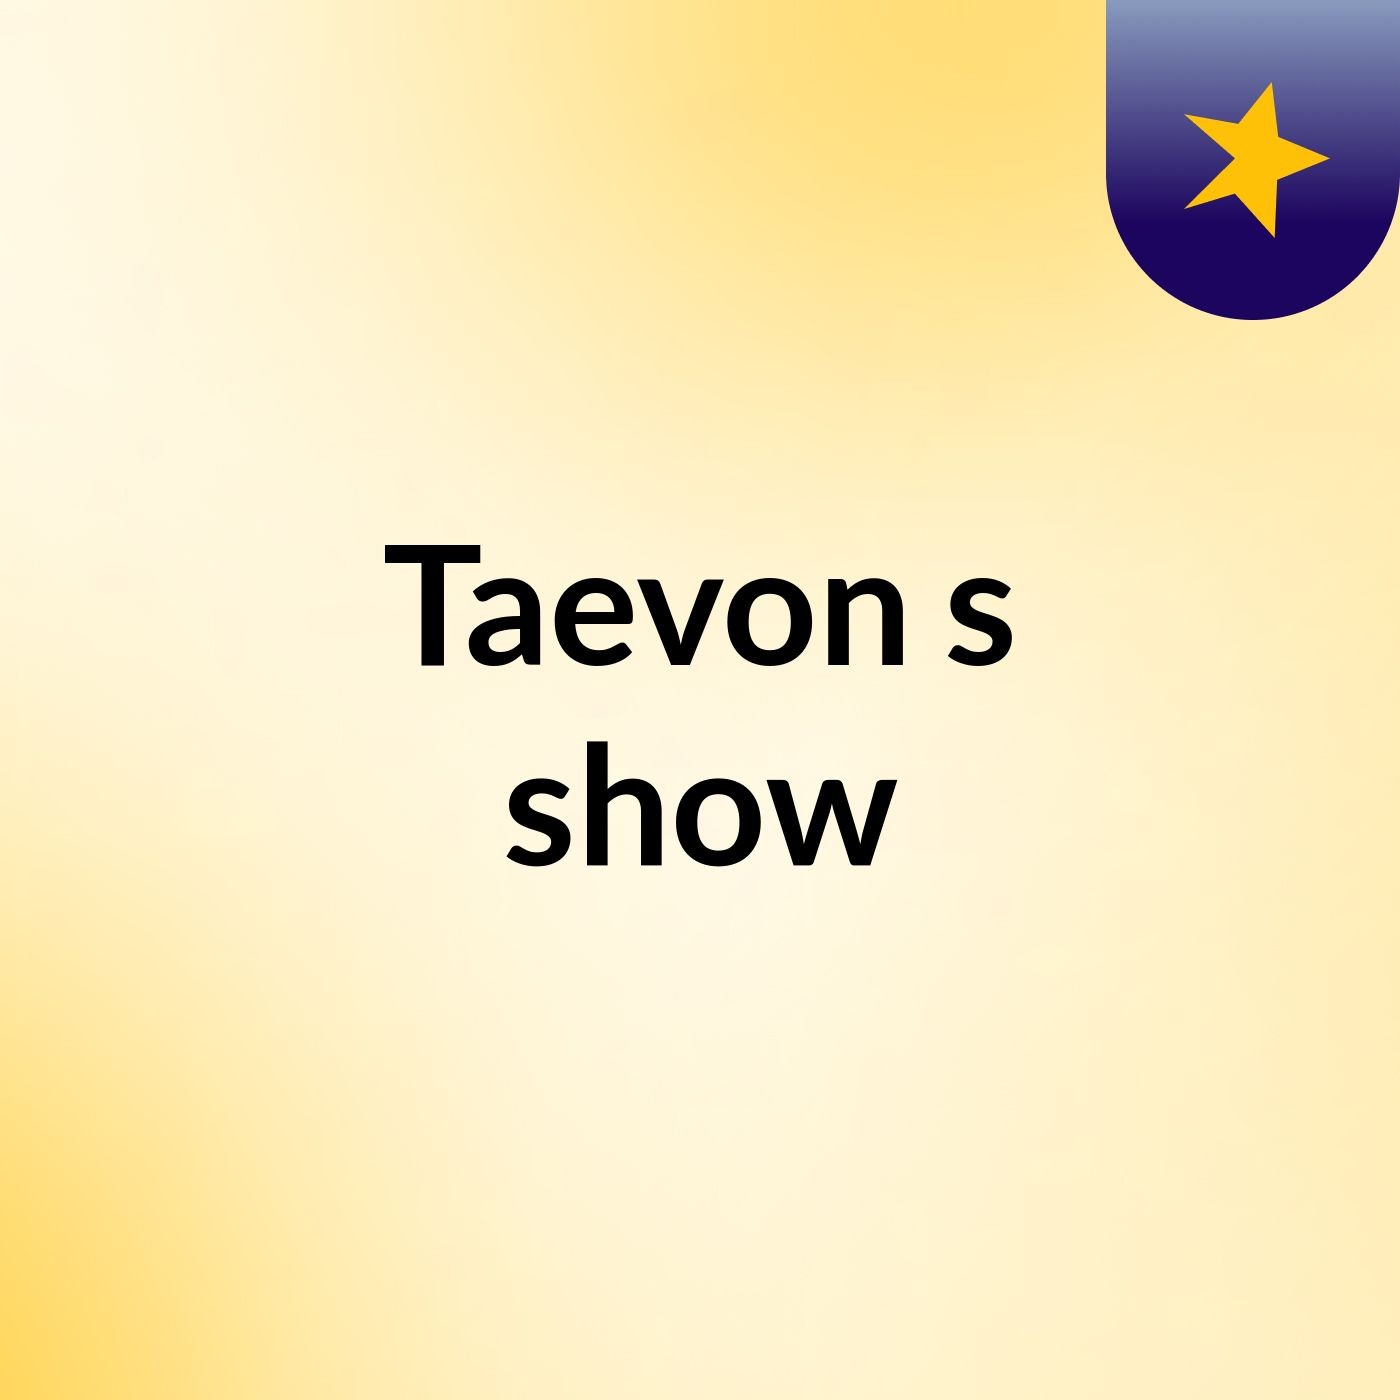 Taevon's show